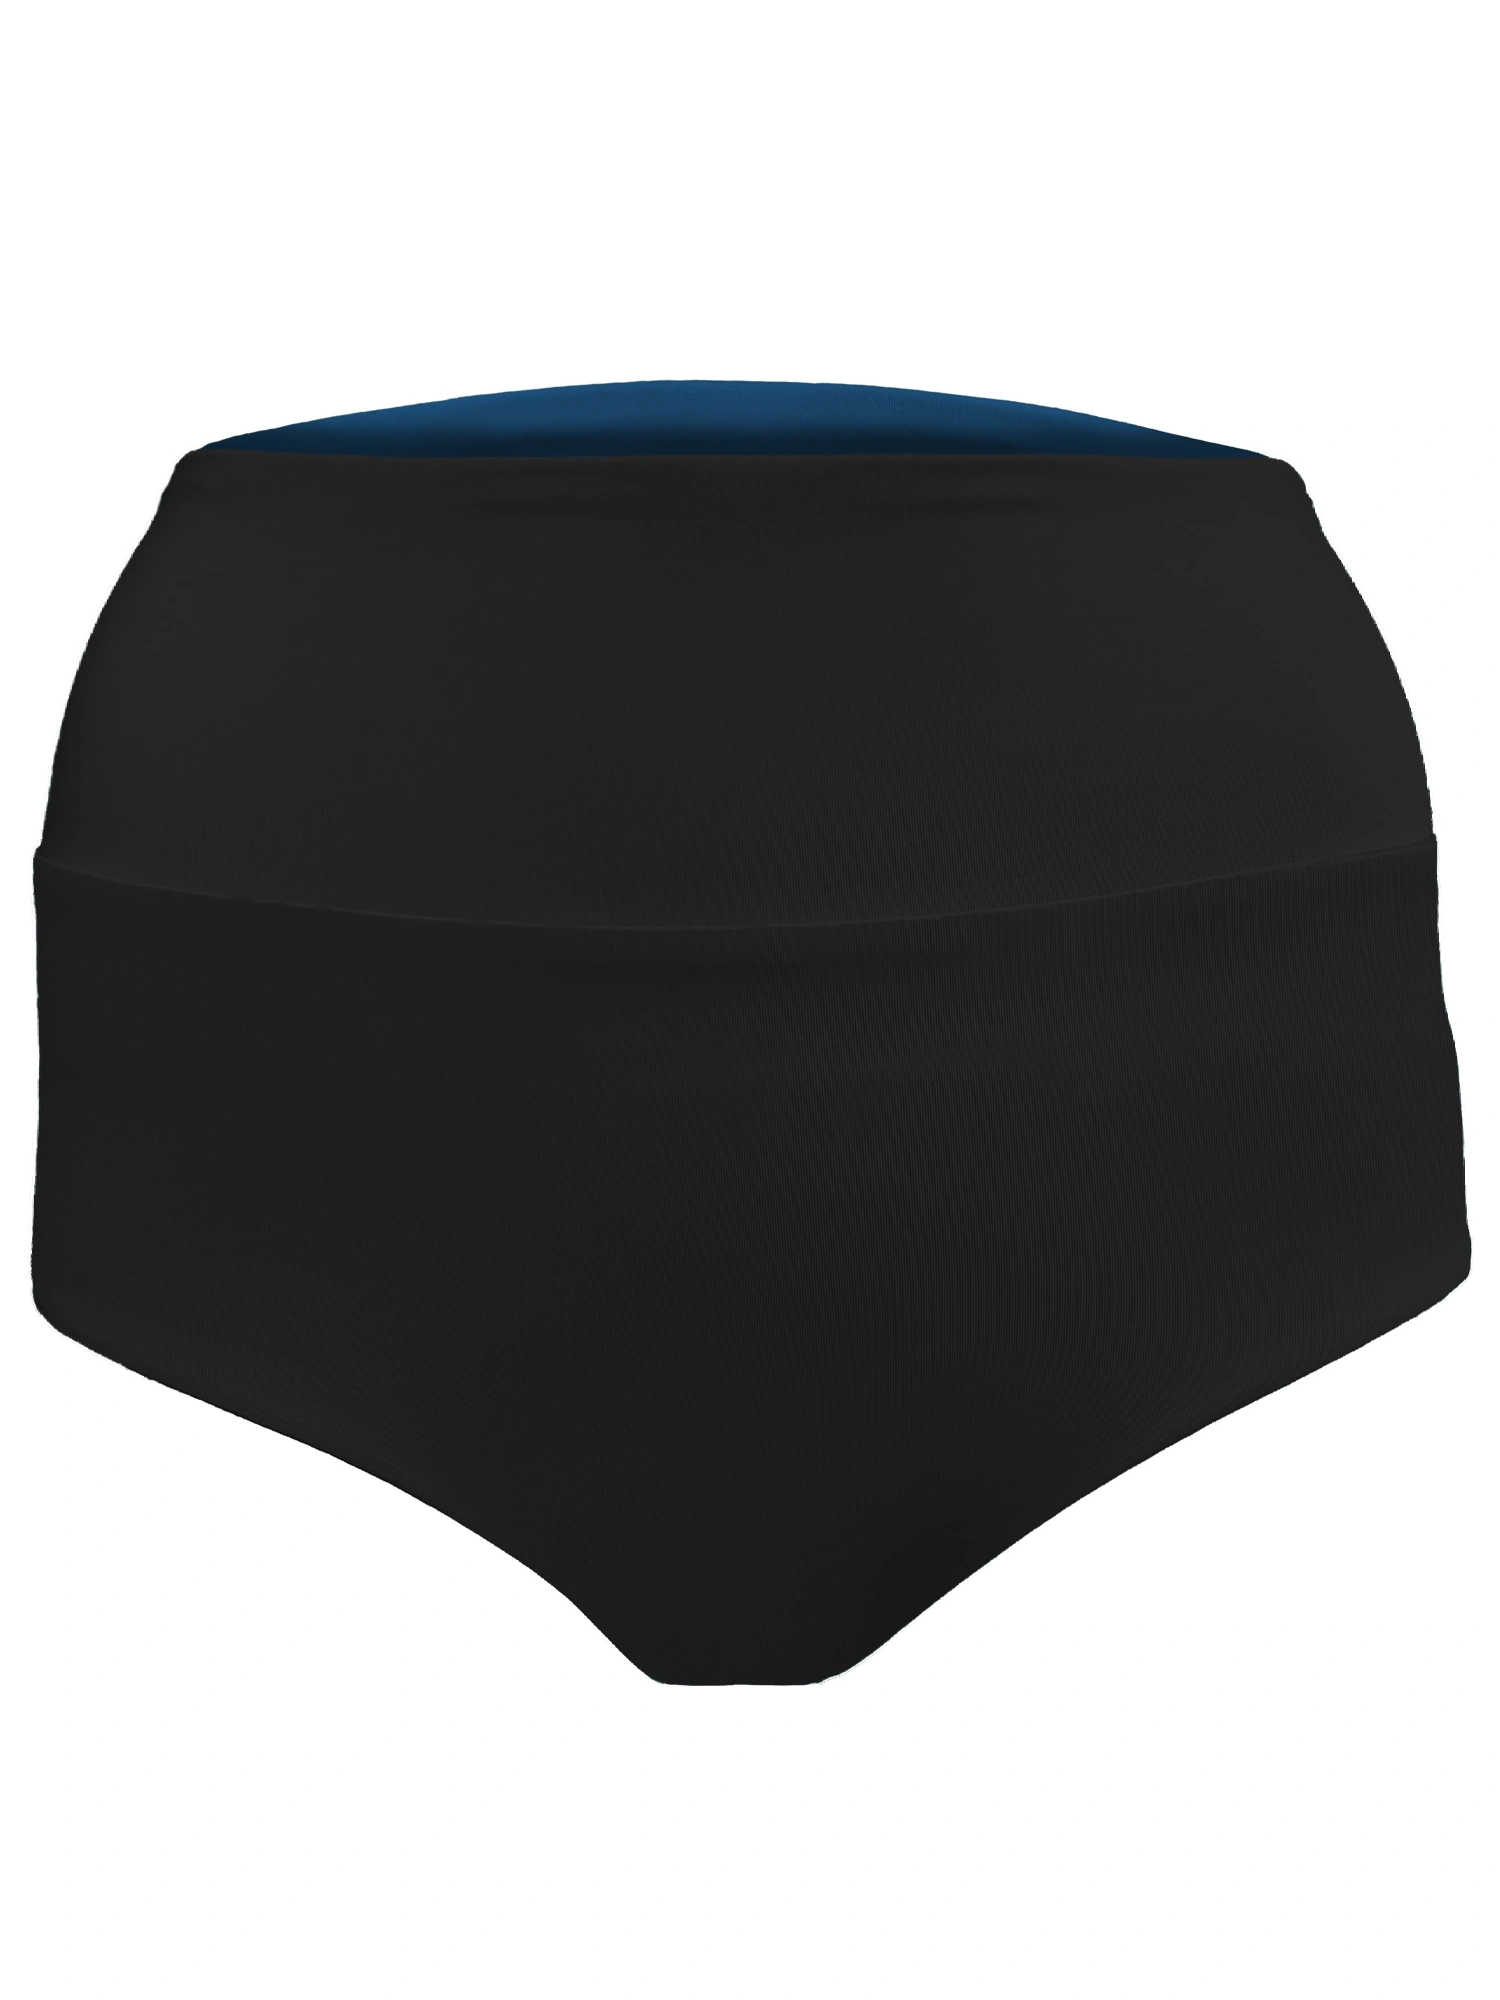 Bikini Shorts Wave Reversible Black & Navy Blue 2